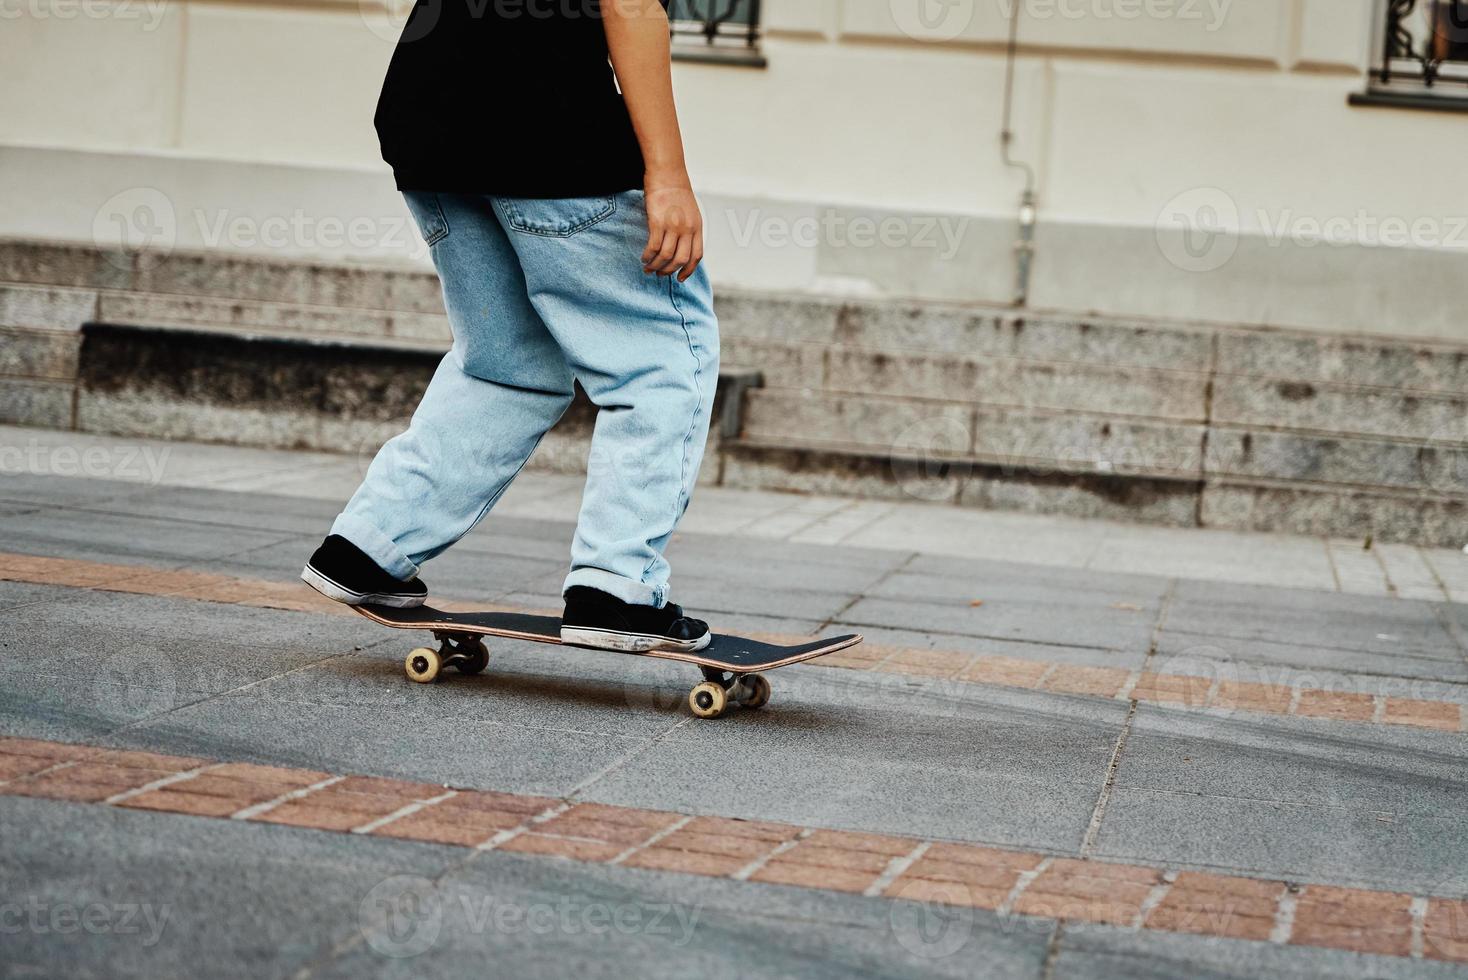 Skateboarder ride on skateboard at city street, close up photo